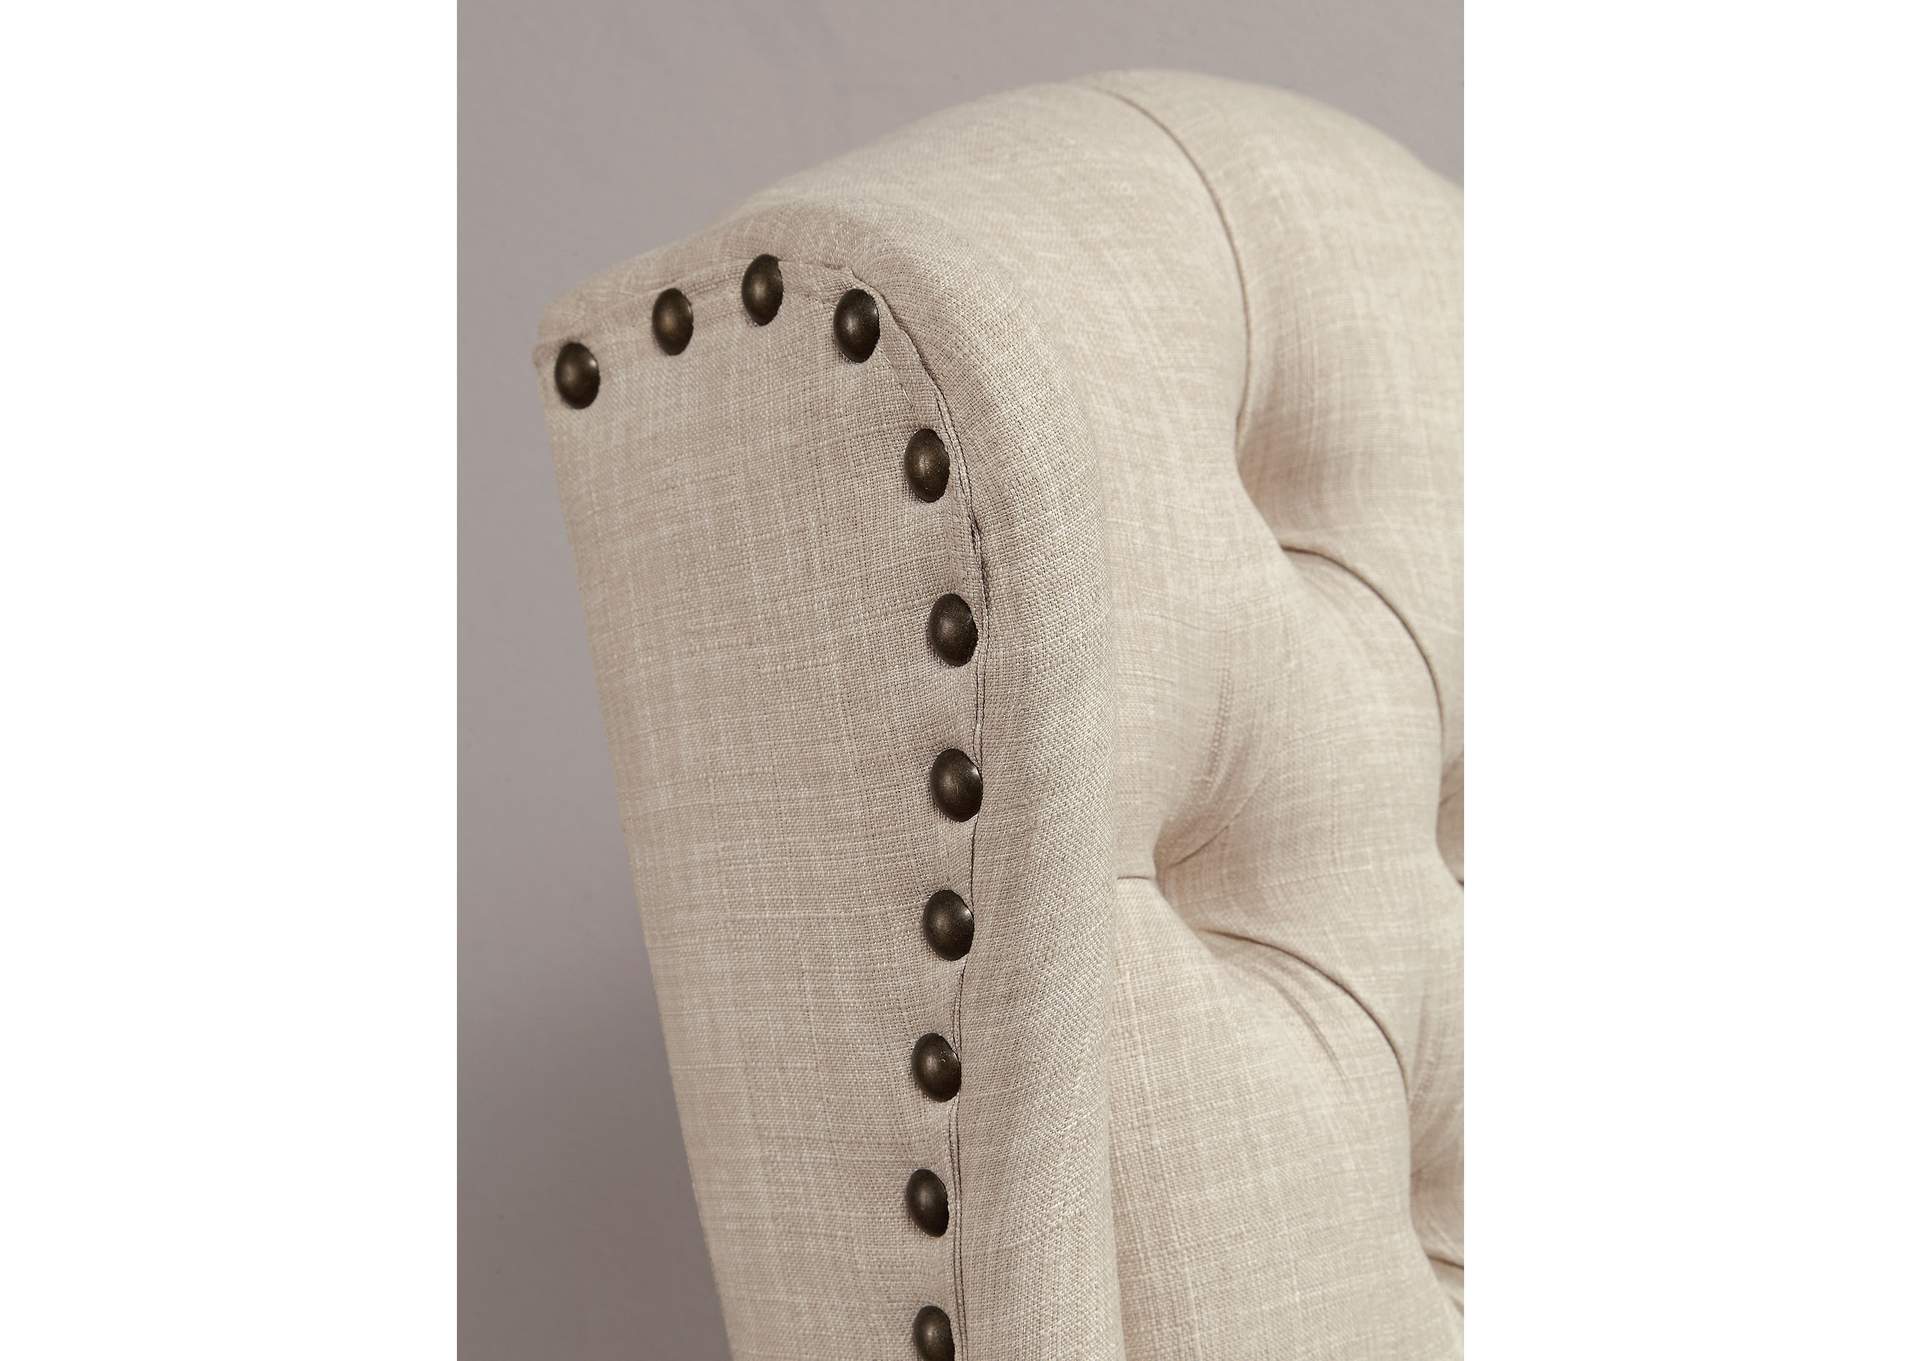 Sania Side Chair (2/Box),Furniture of America